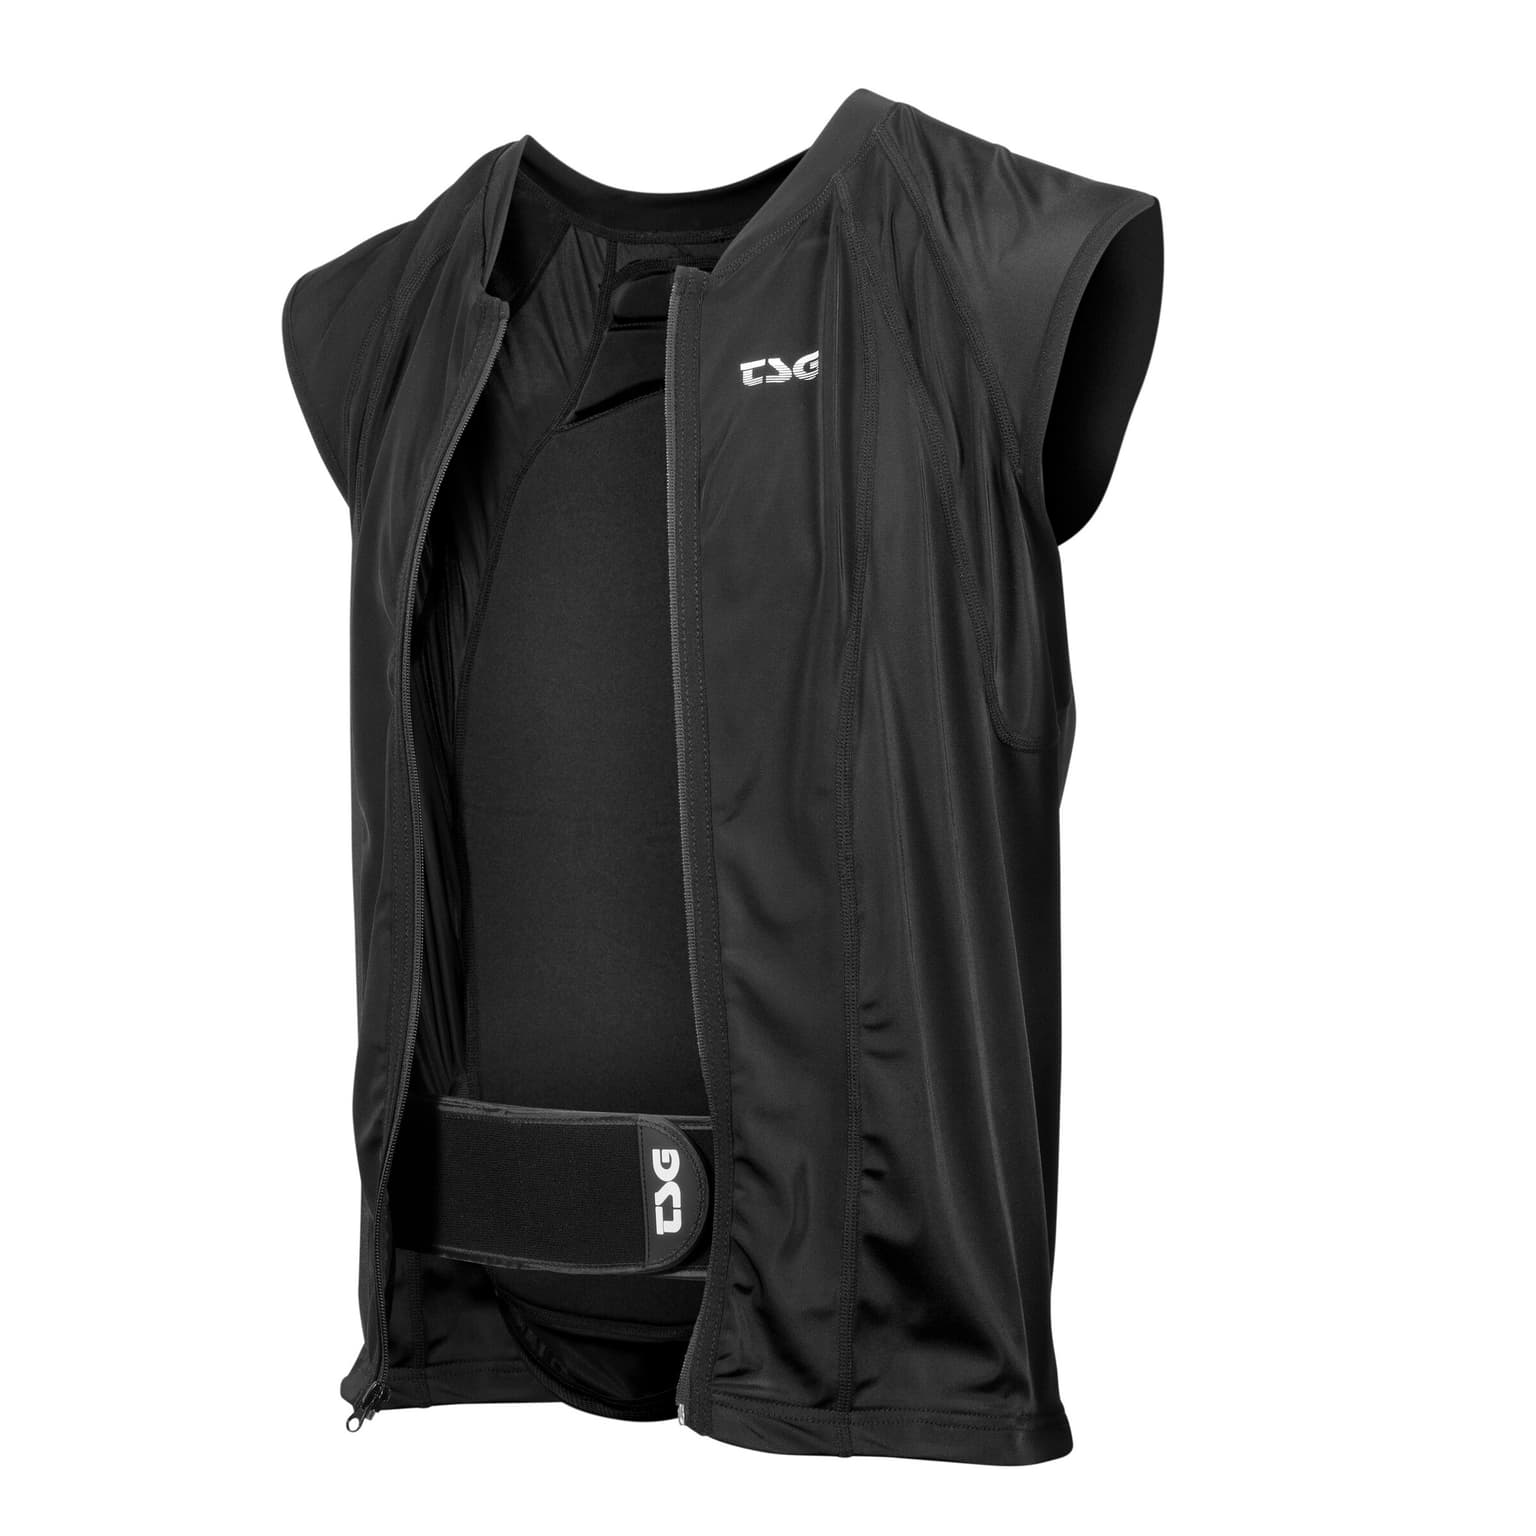 Tsg Tsg Backbone Vest A Protections noir 5